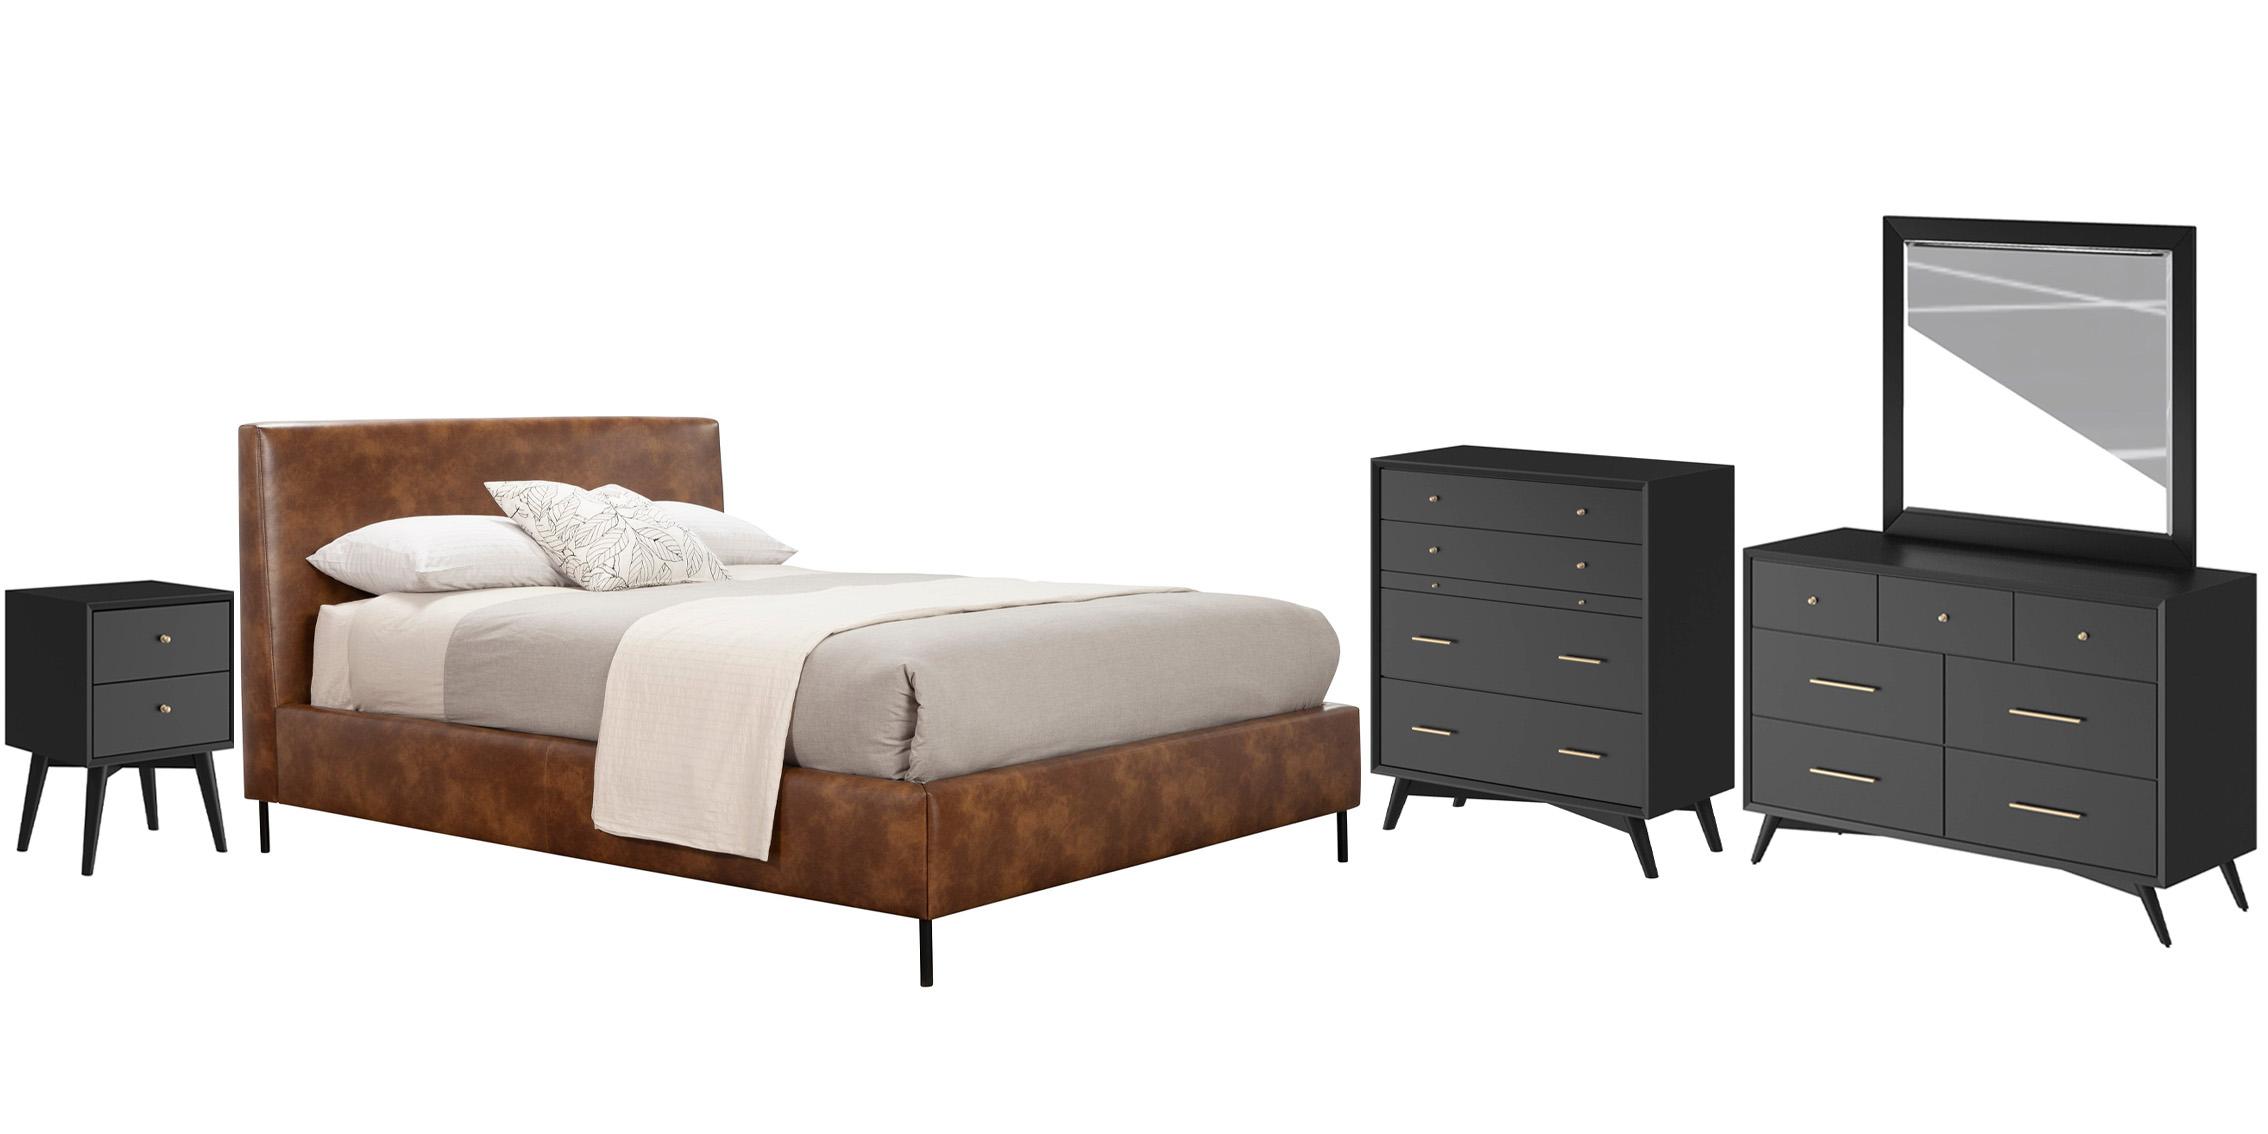 Modern, Rustic Platform Bedroom Set SOPHIA/FLYNN 6902Q-BRN-Set-5-BLK in Brown, Black Faux Leather